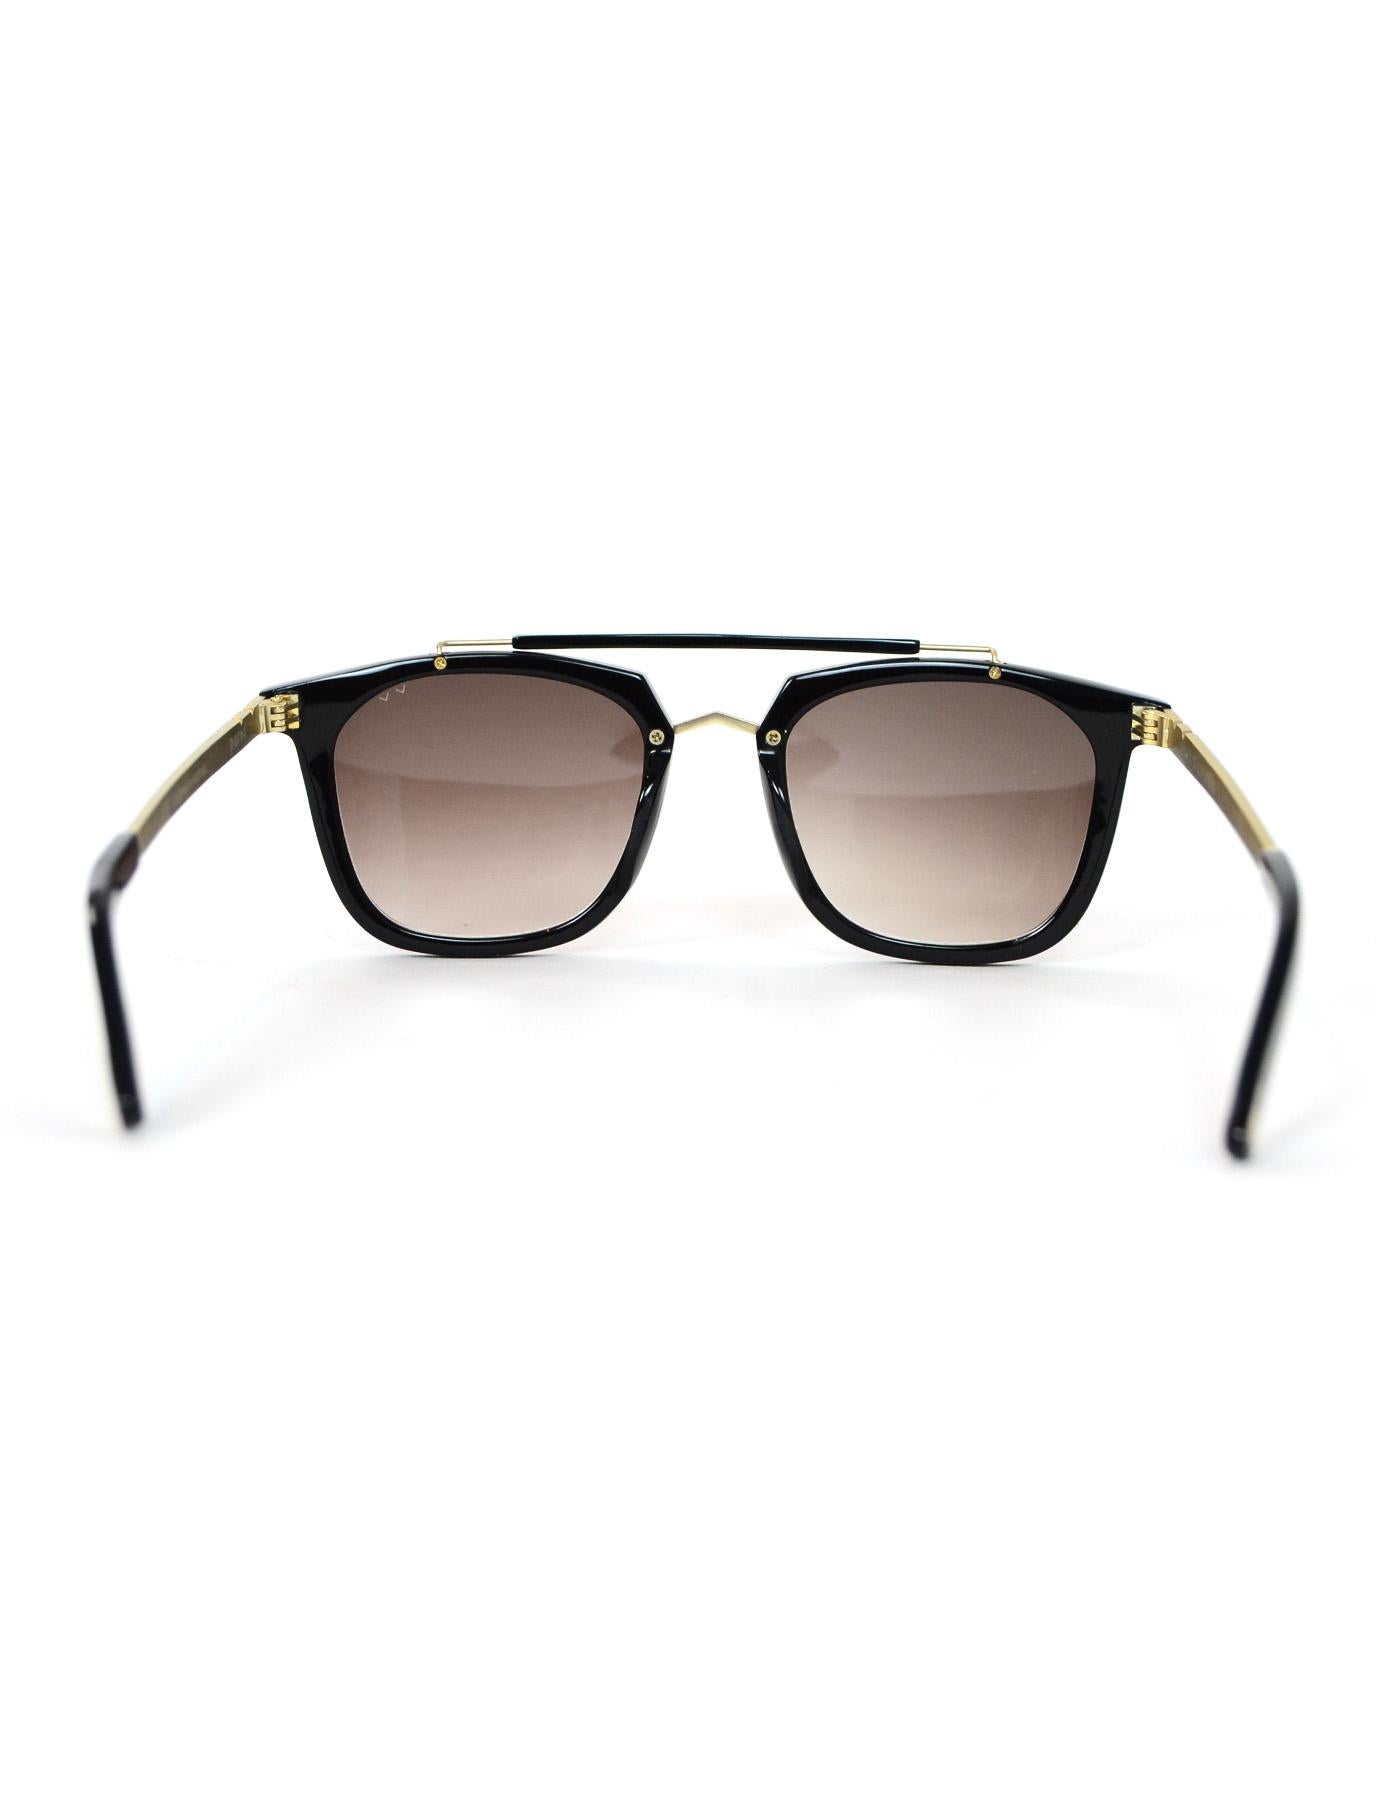 Pared Black/Gold Camels & Caravans Aviator Sunglasses w/ Brown Lenses rt. $270 1